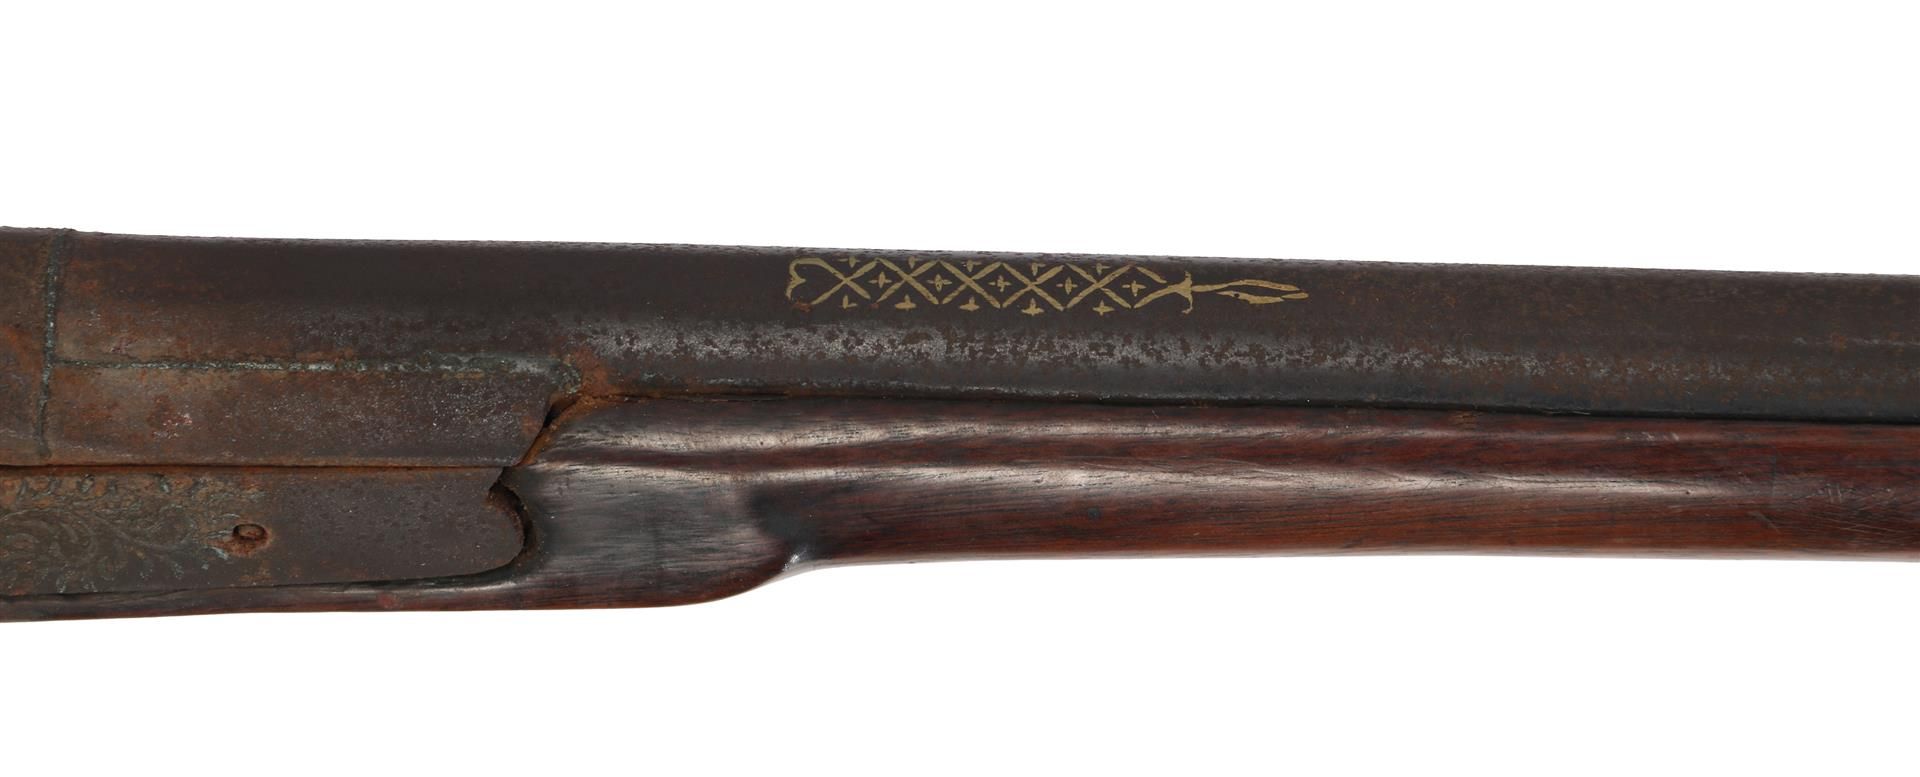 Antique rifle - Image 3 of 3